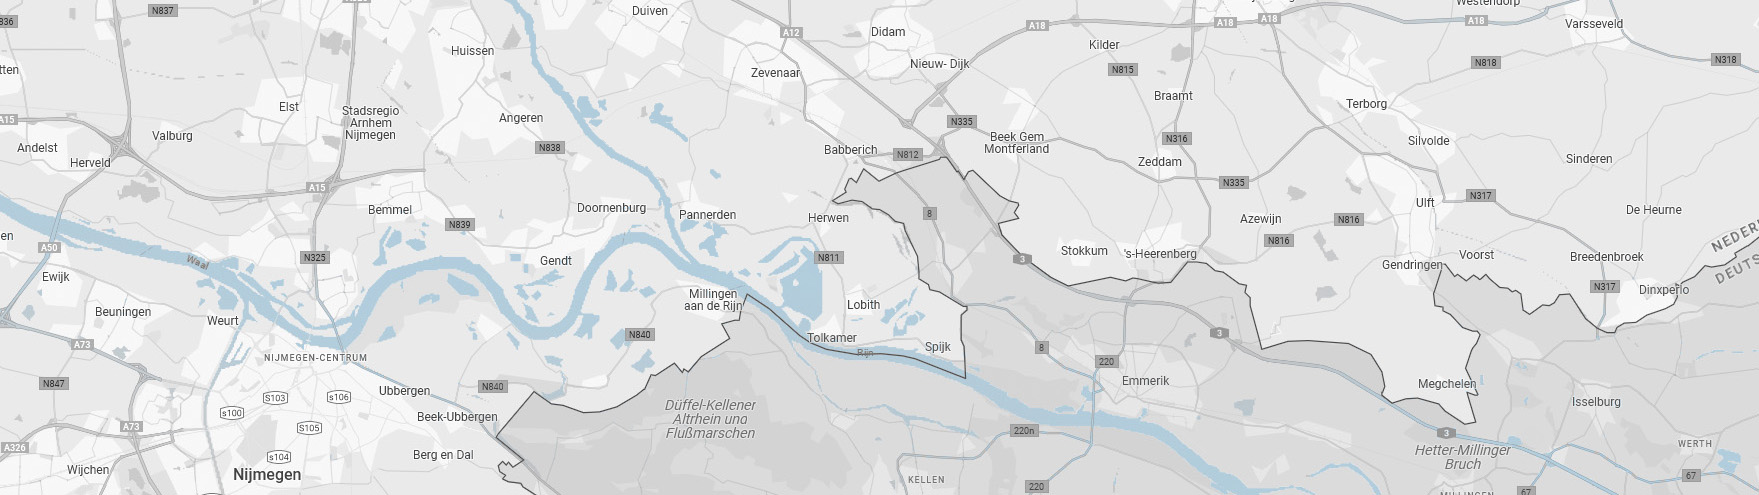 Liemers-Niederrhein gebied